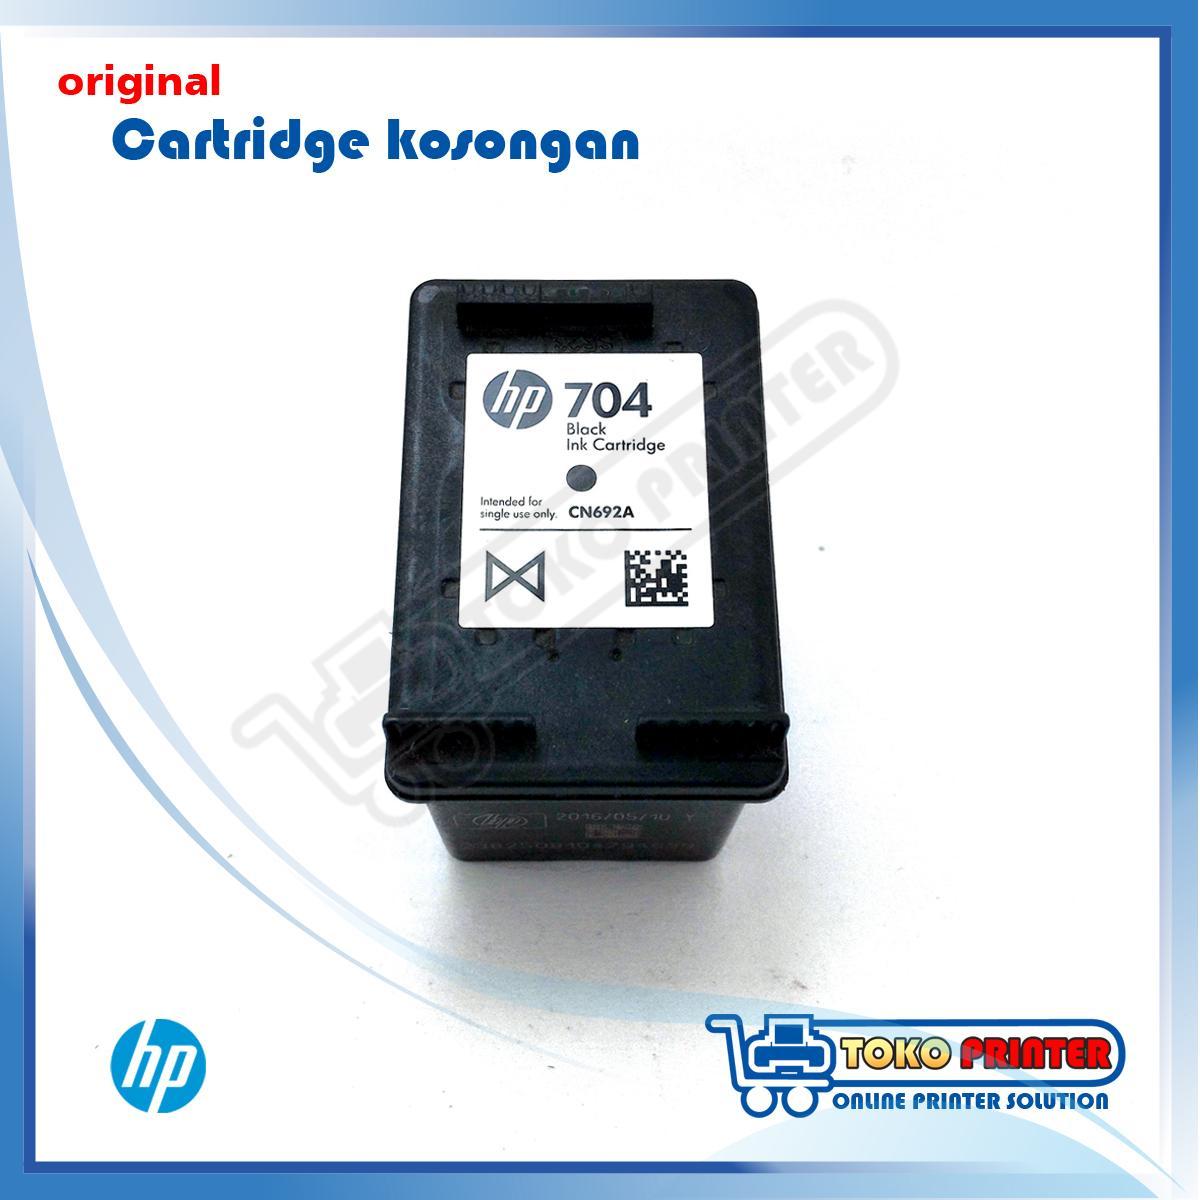 Cartridge Kosongan HP 704 Hitam